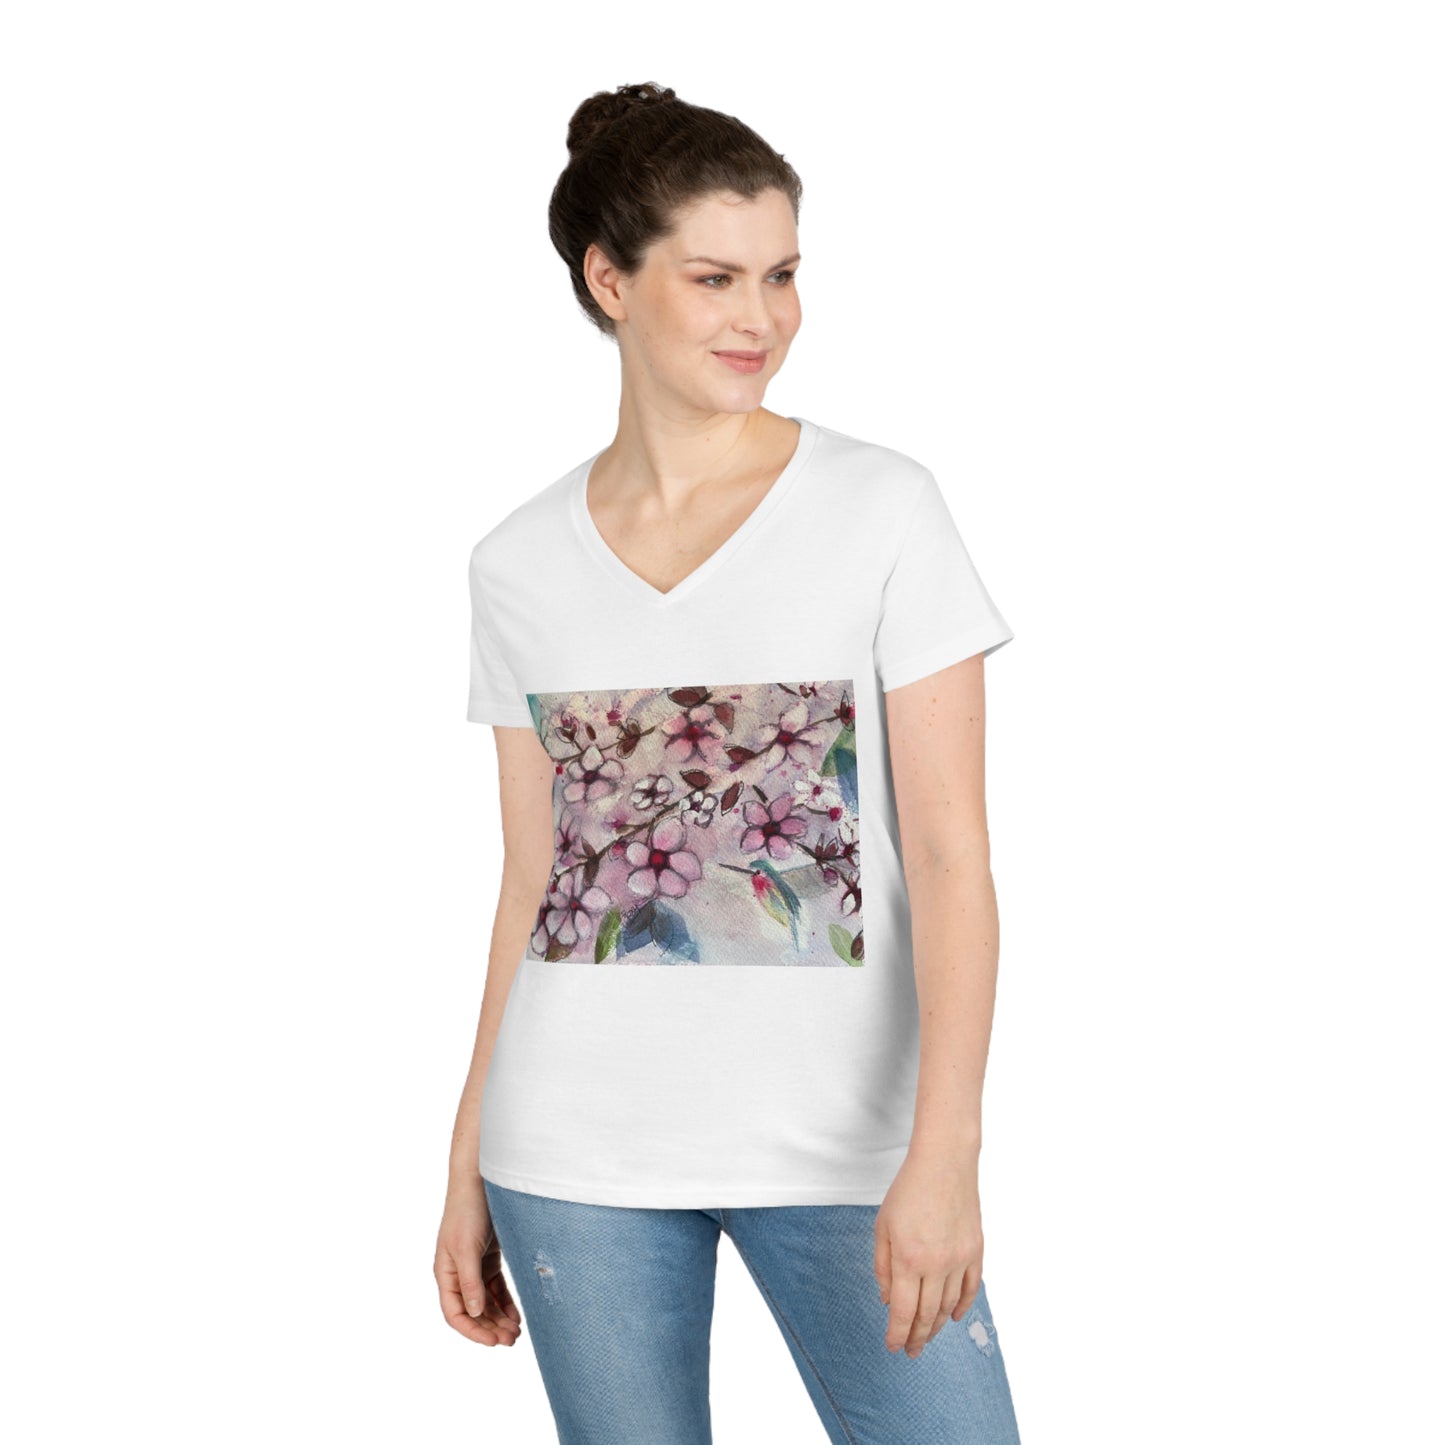 Hummingbird in Cherry Blossoms Ladies' V-Neck T-Shirt